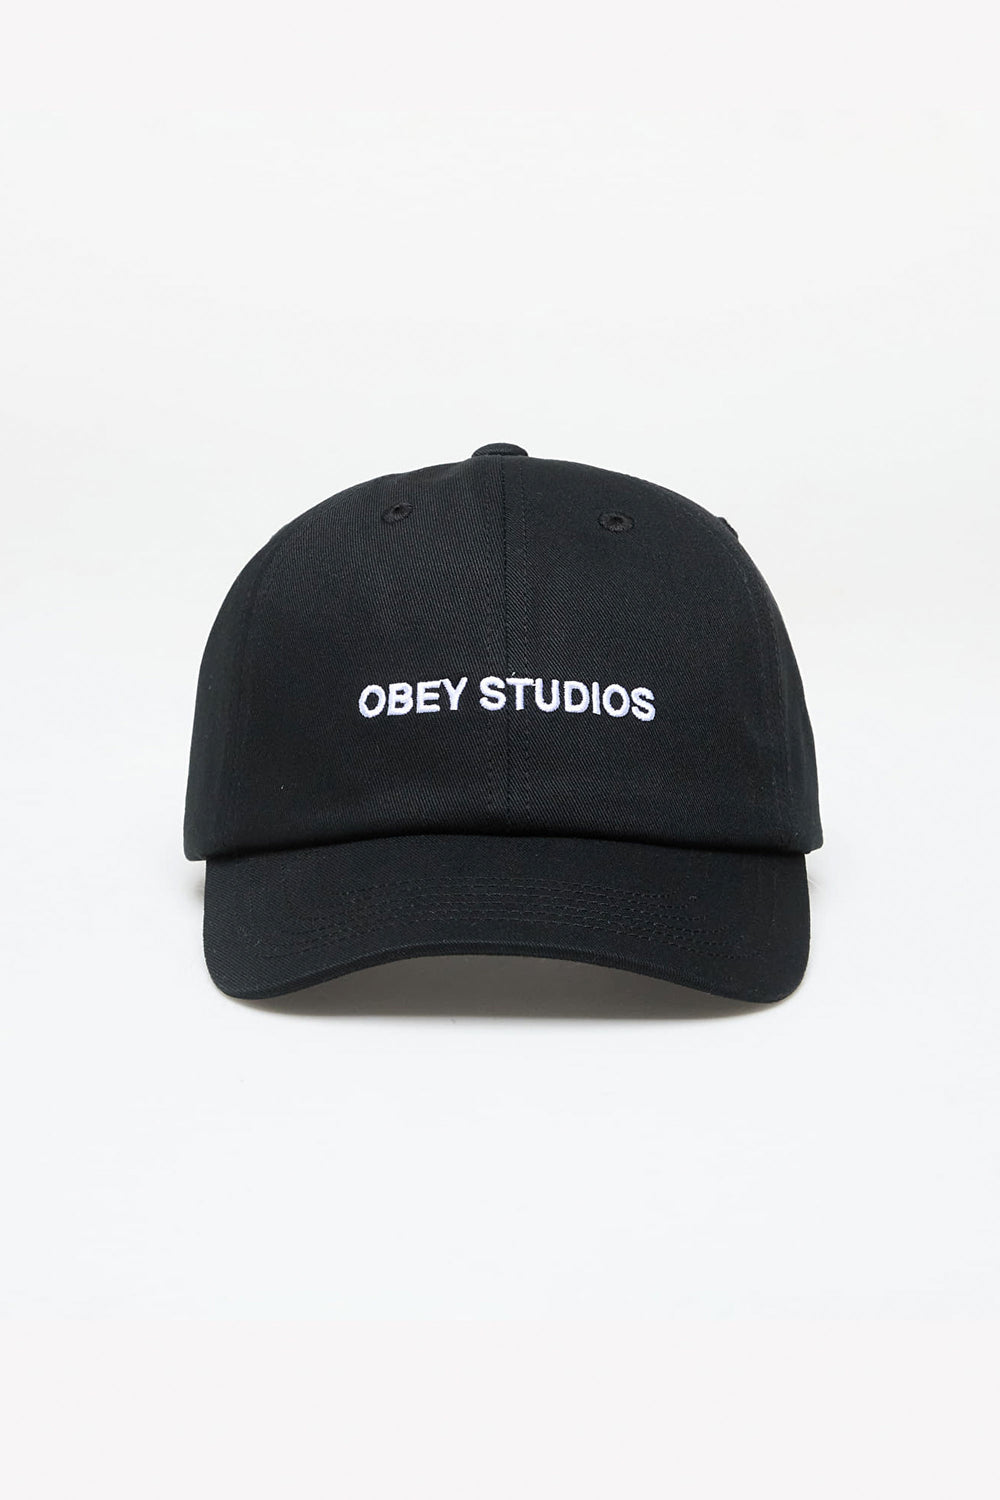 OBEY - OBEY STUDIOS STRAP BACK HAT